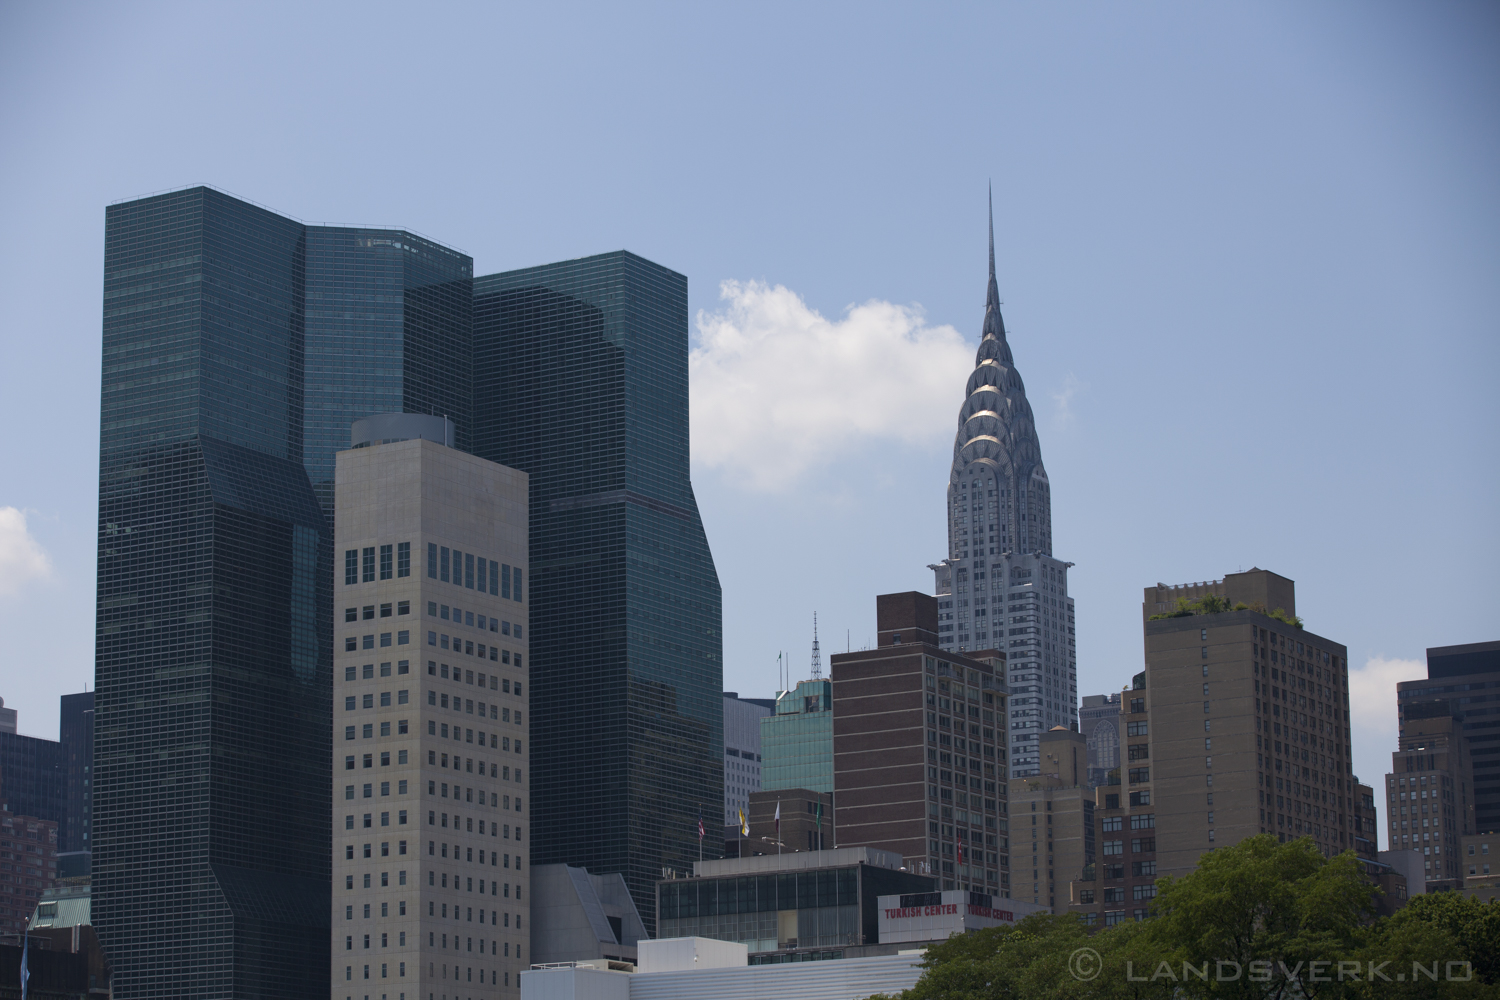 Manhattan, New York. 

(Canon EOS 5D Mark II / Canon EF 70-200mm f/2.8 L IS II USM)